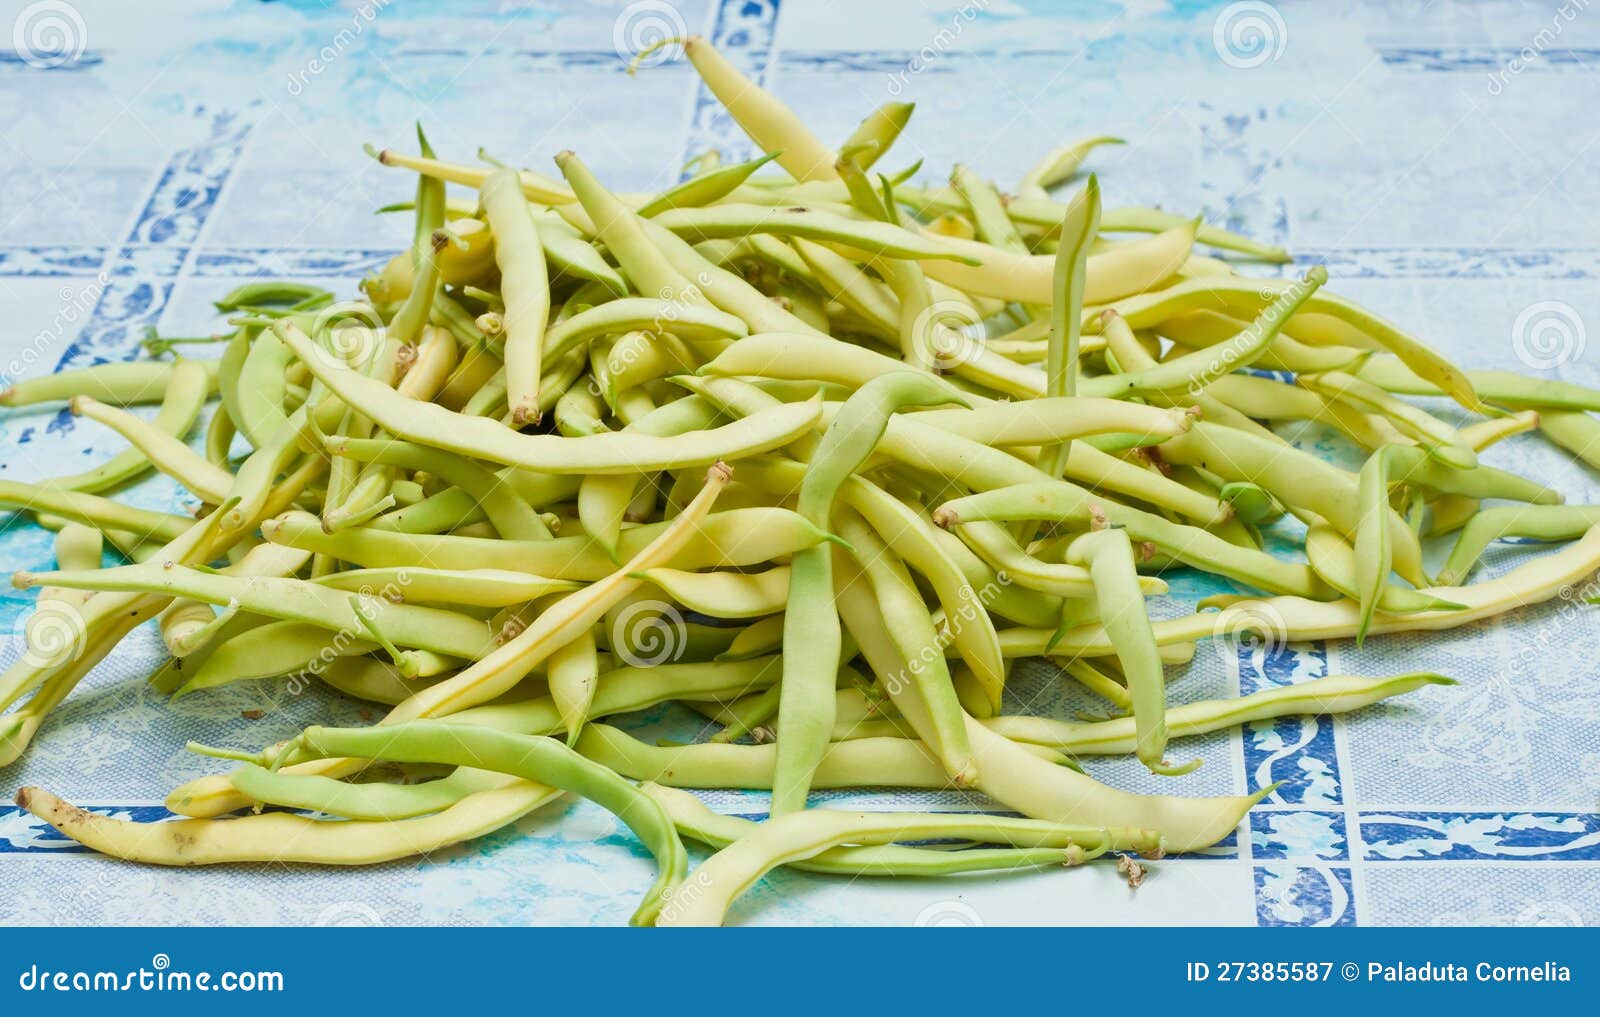 Yellow Beans 27385587 